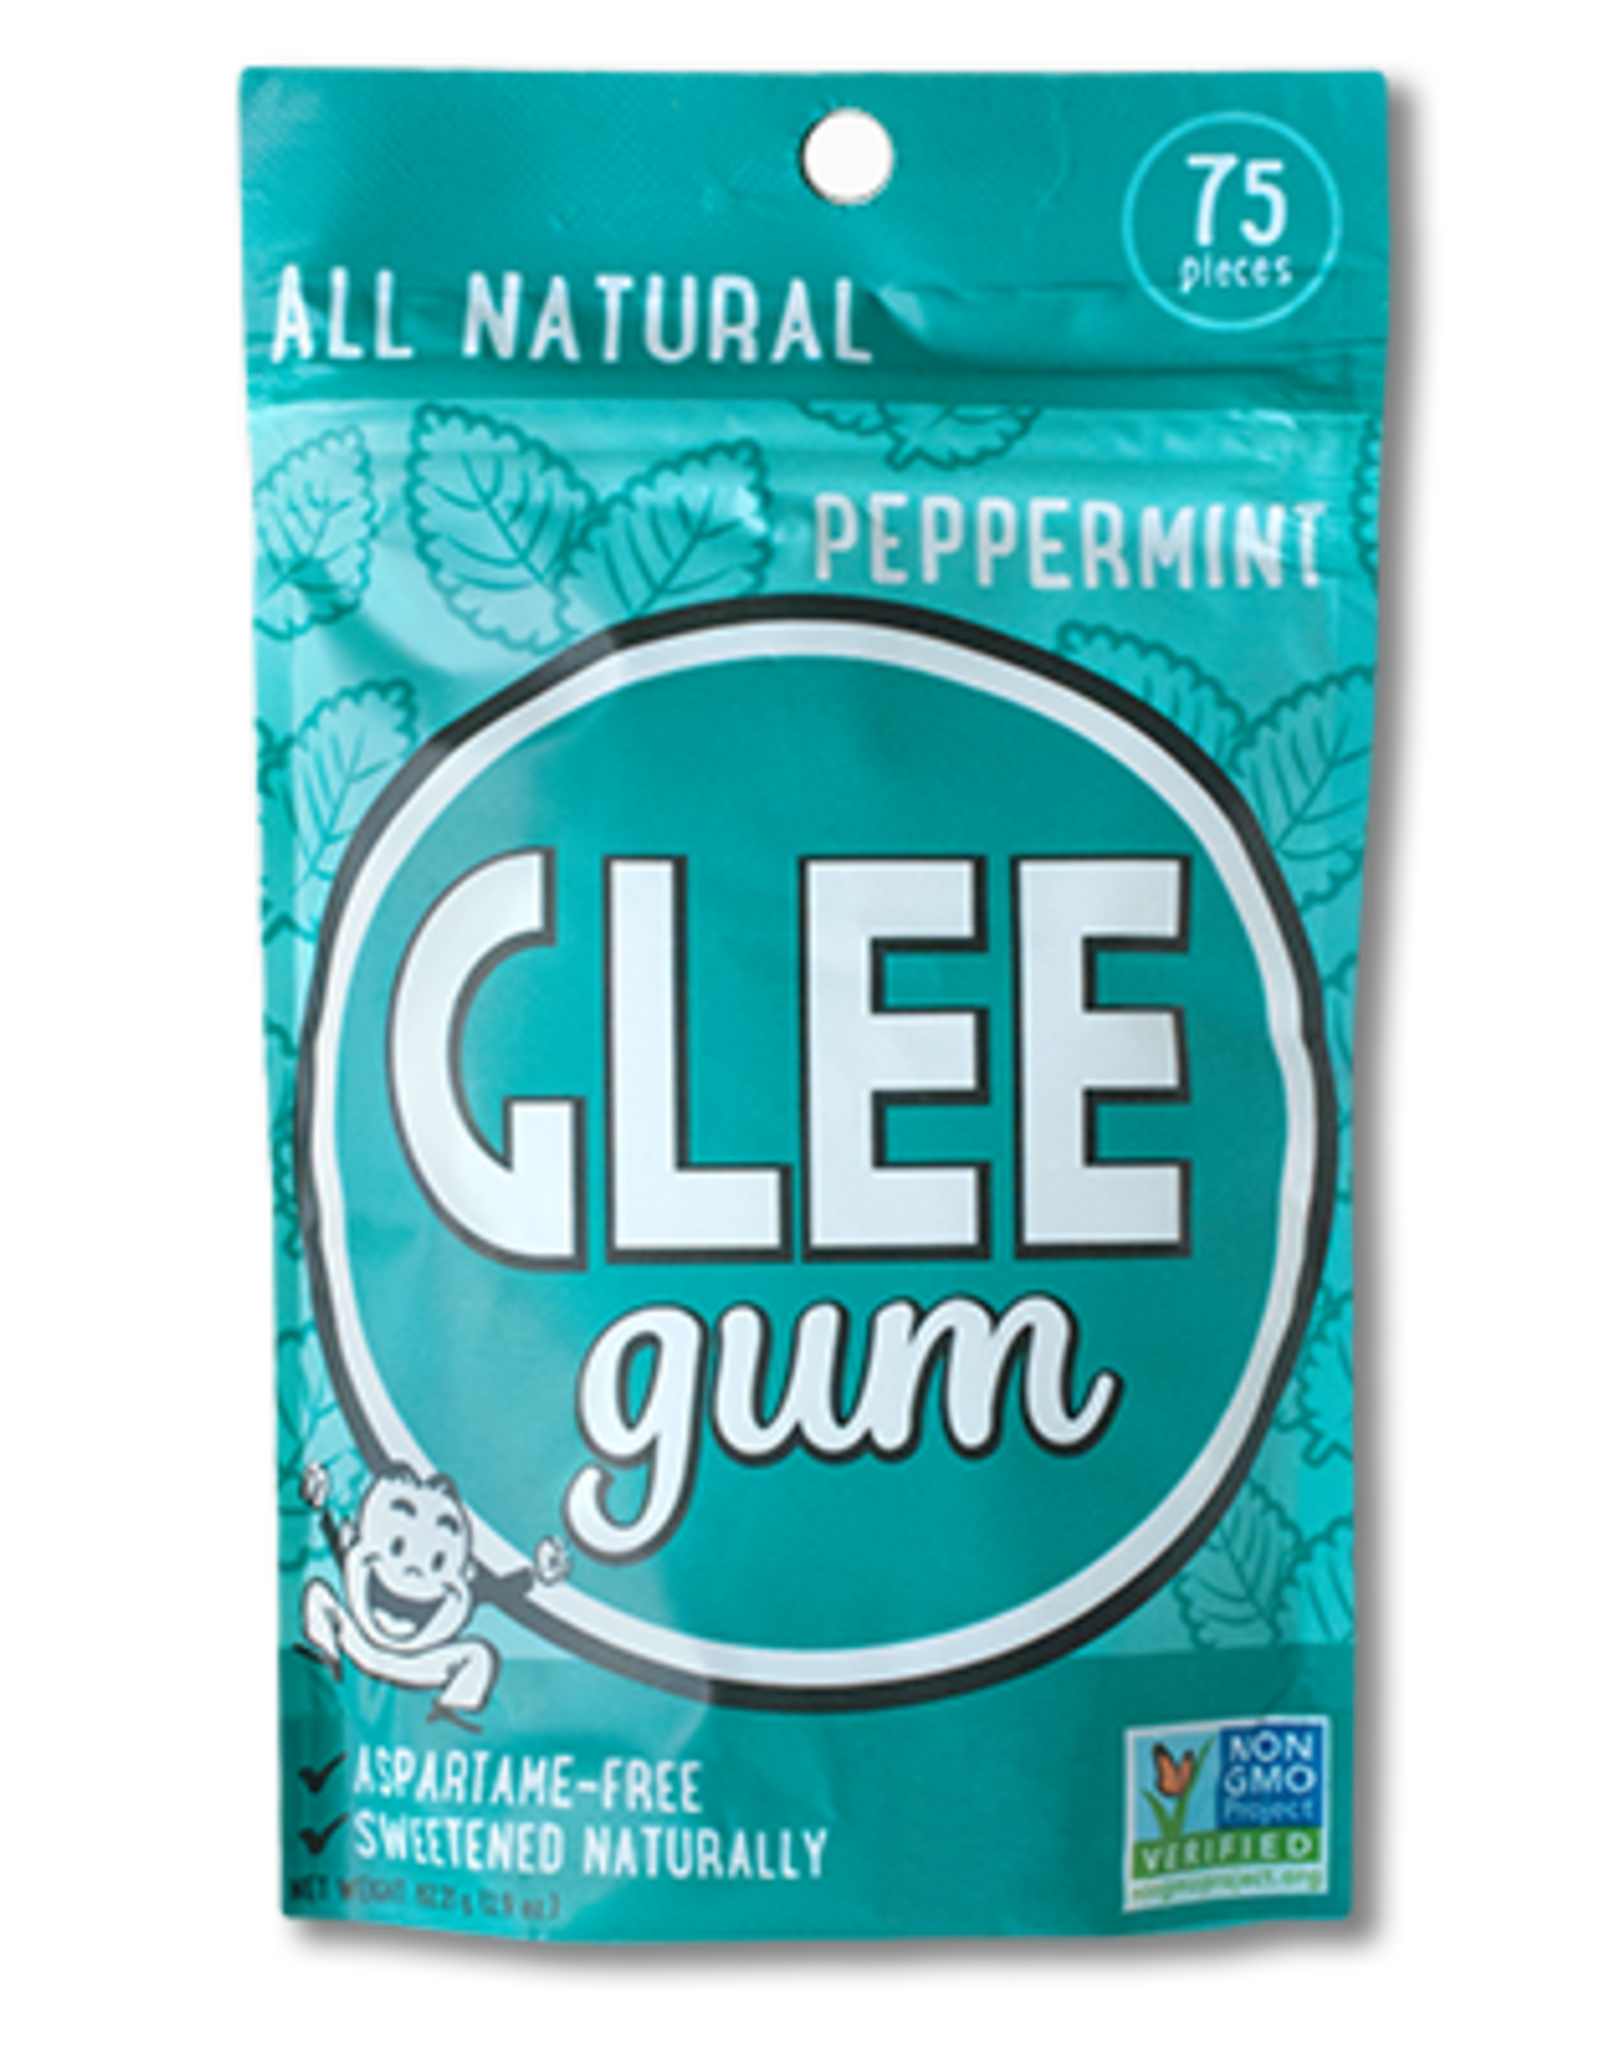 Glee Glee Gum Peppermint bag